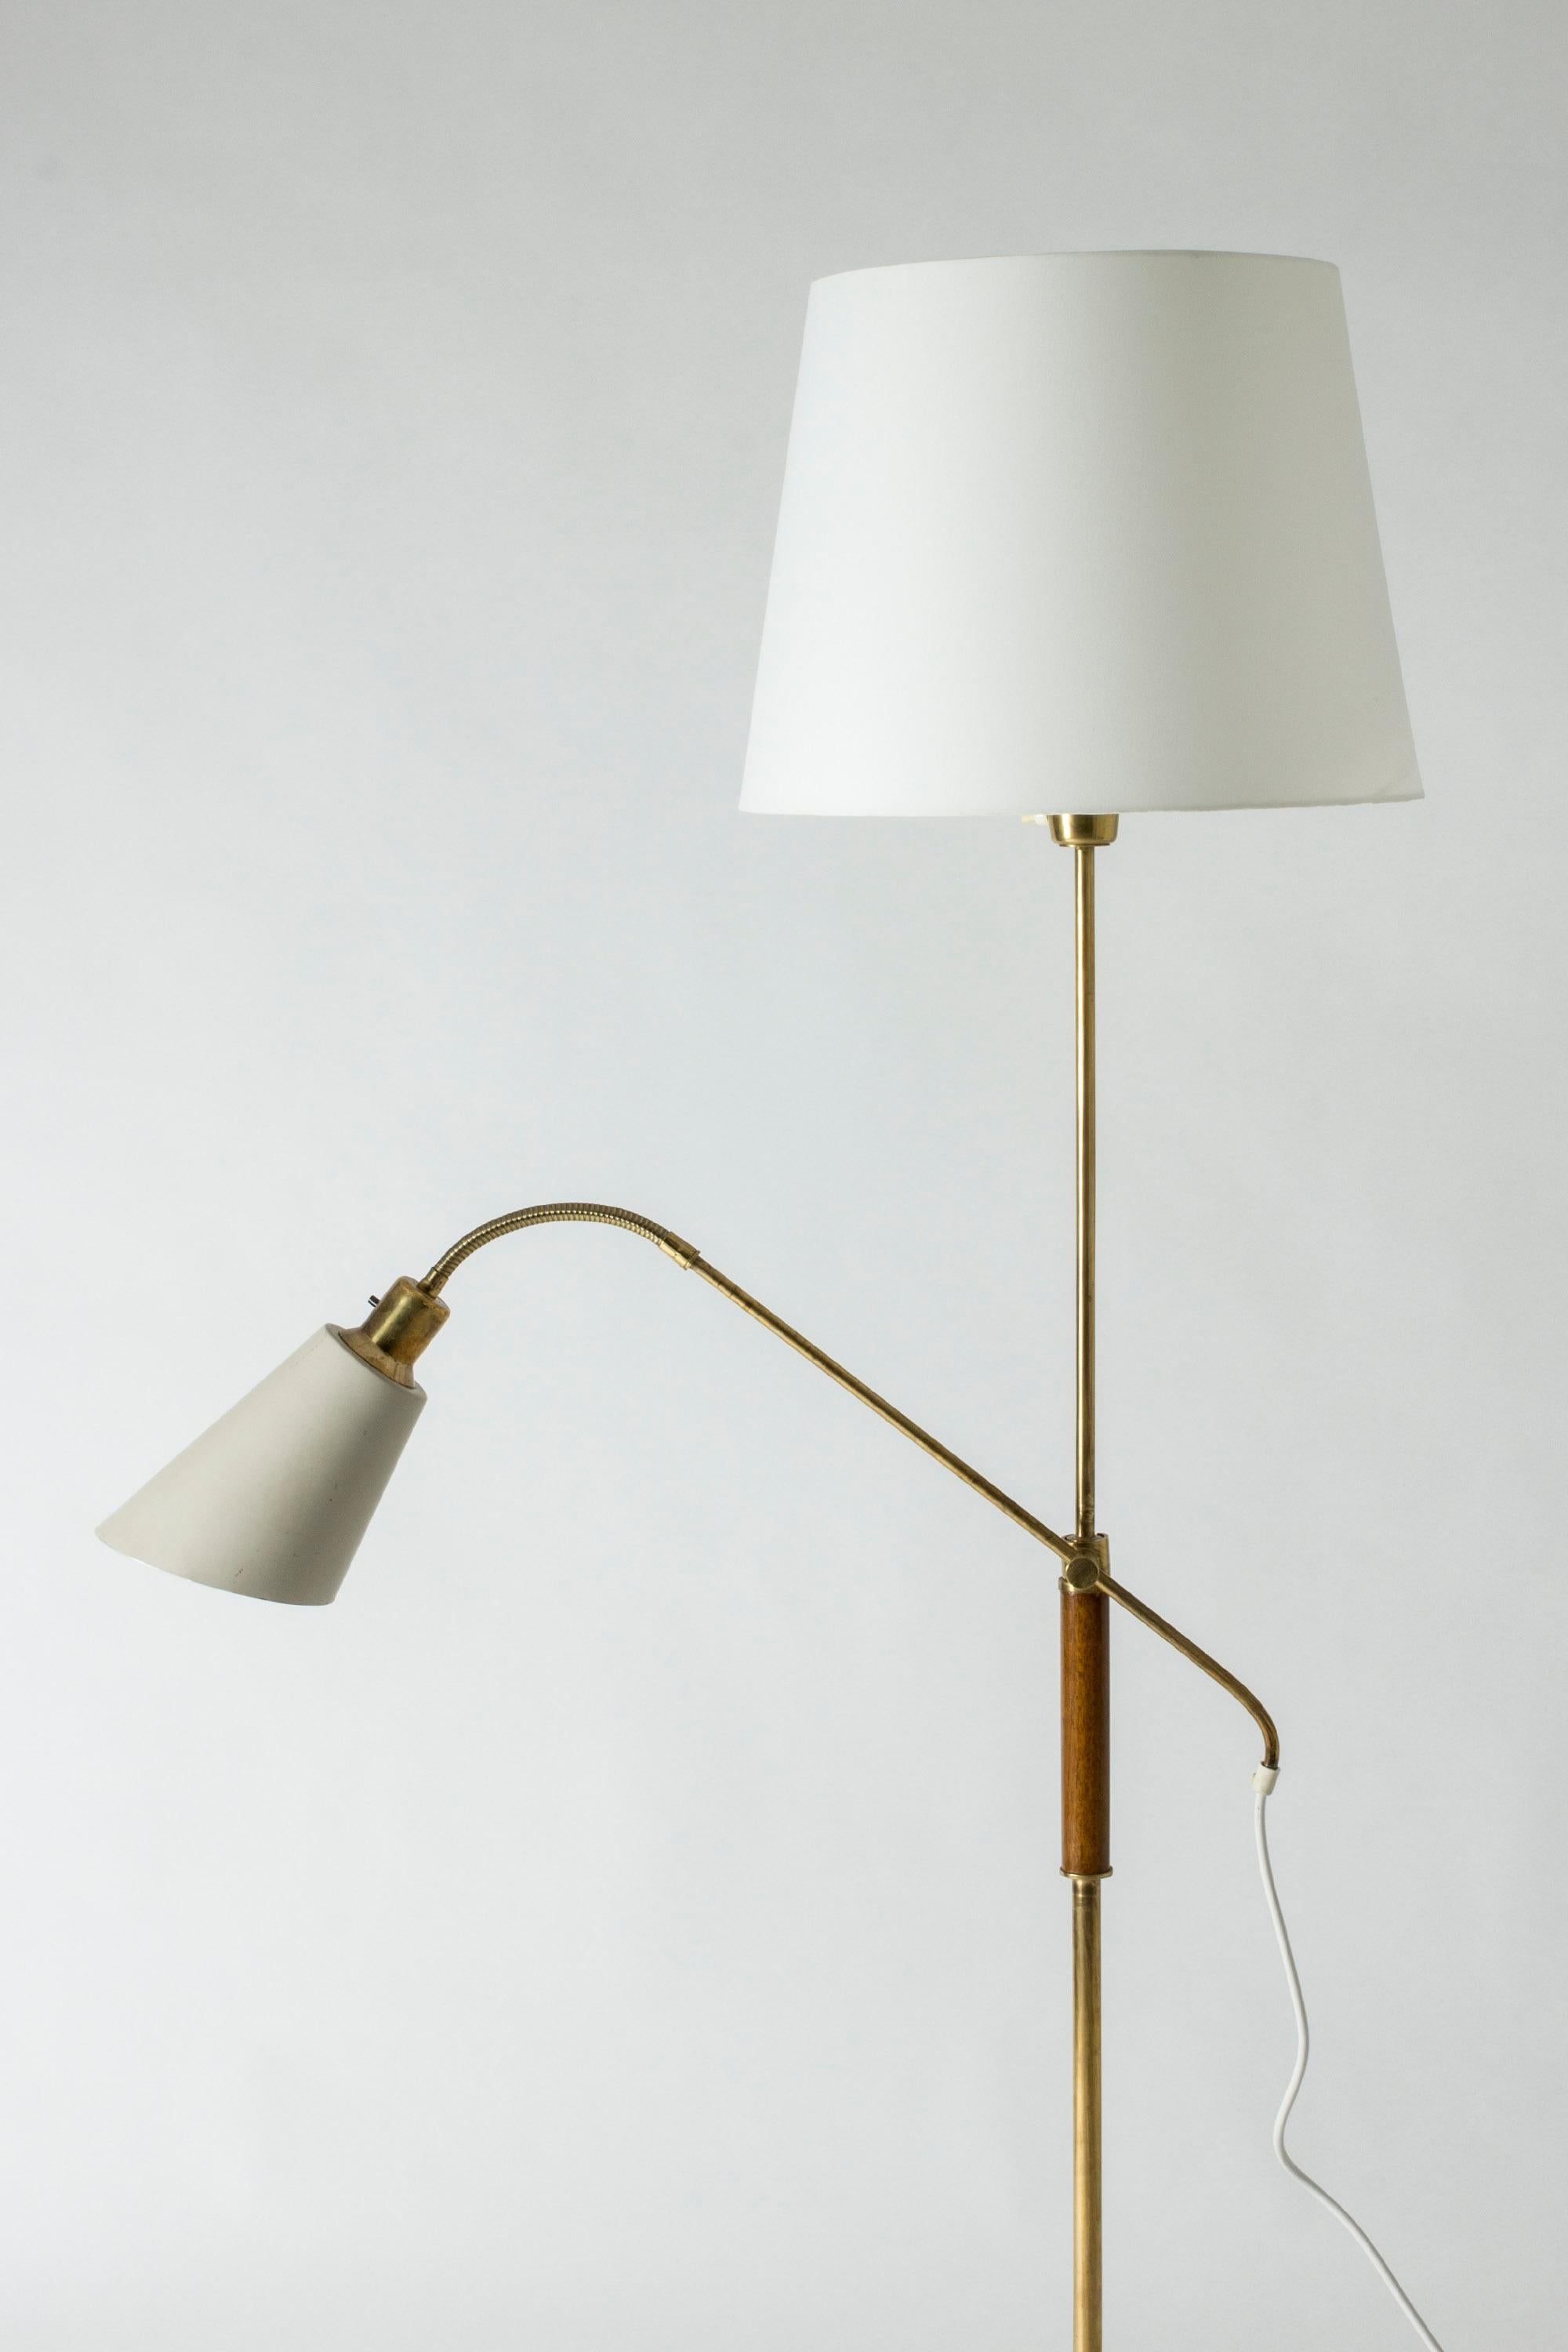 Mid-20th Century Brass and Wood Swedish Floor Lamp by Bertil Brisborg for Nordiska Kompaniet